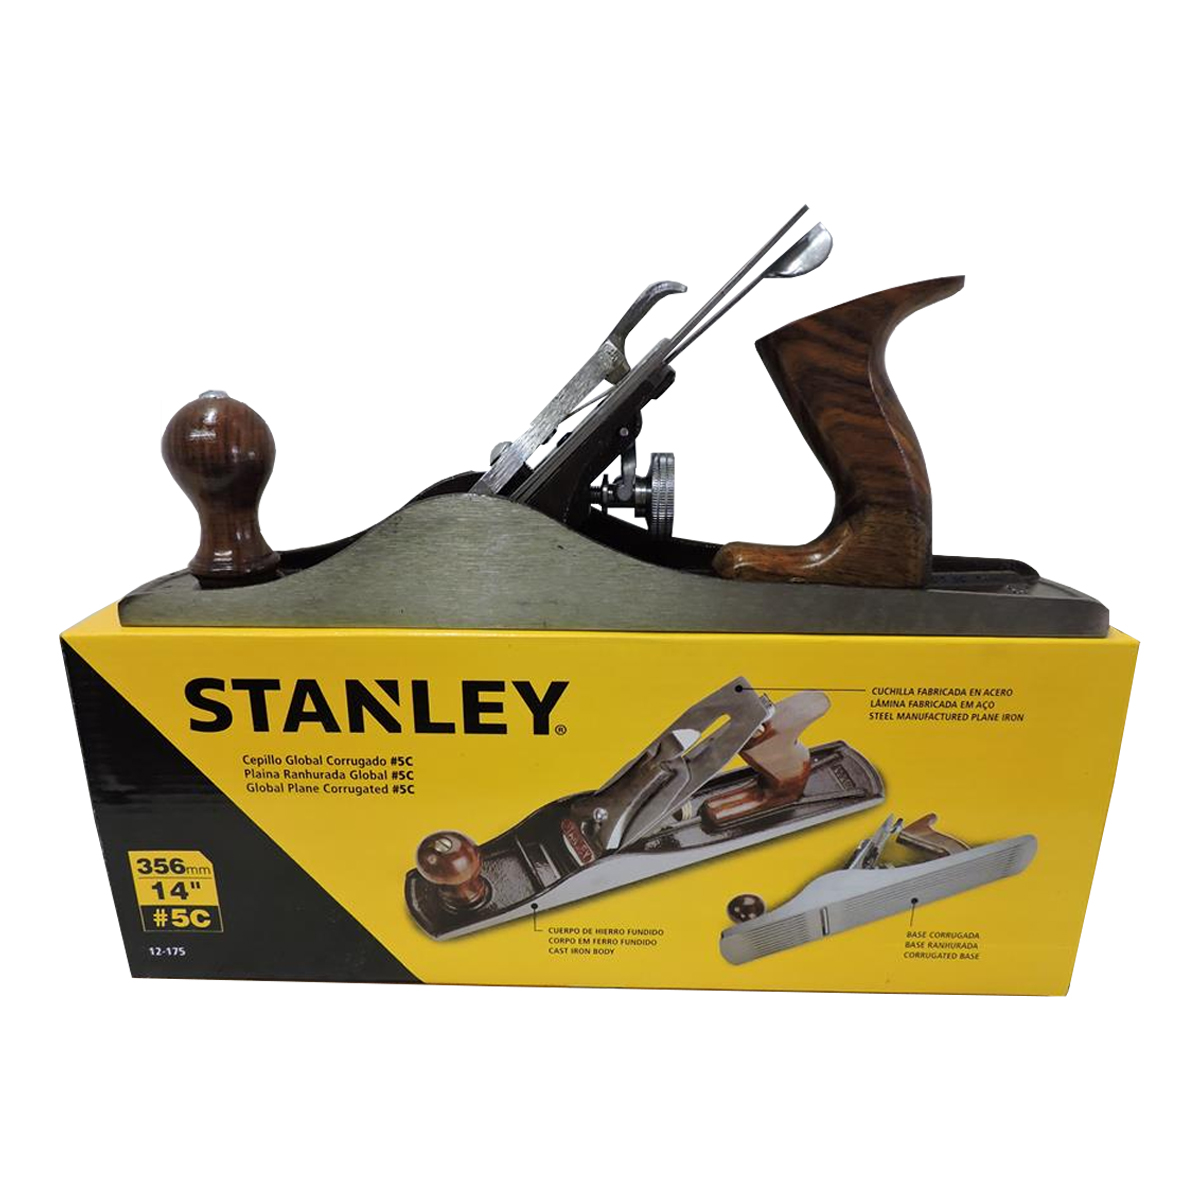 Cepillo Carpintero Corrugado#5 Stanley 12-175, STANLEY, Tauber